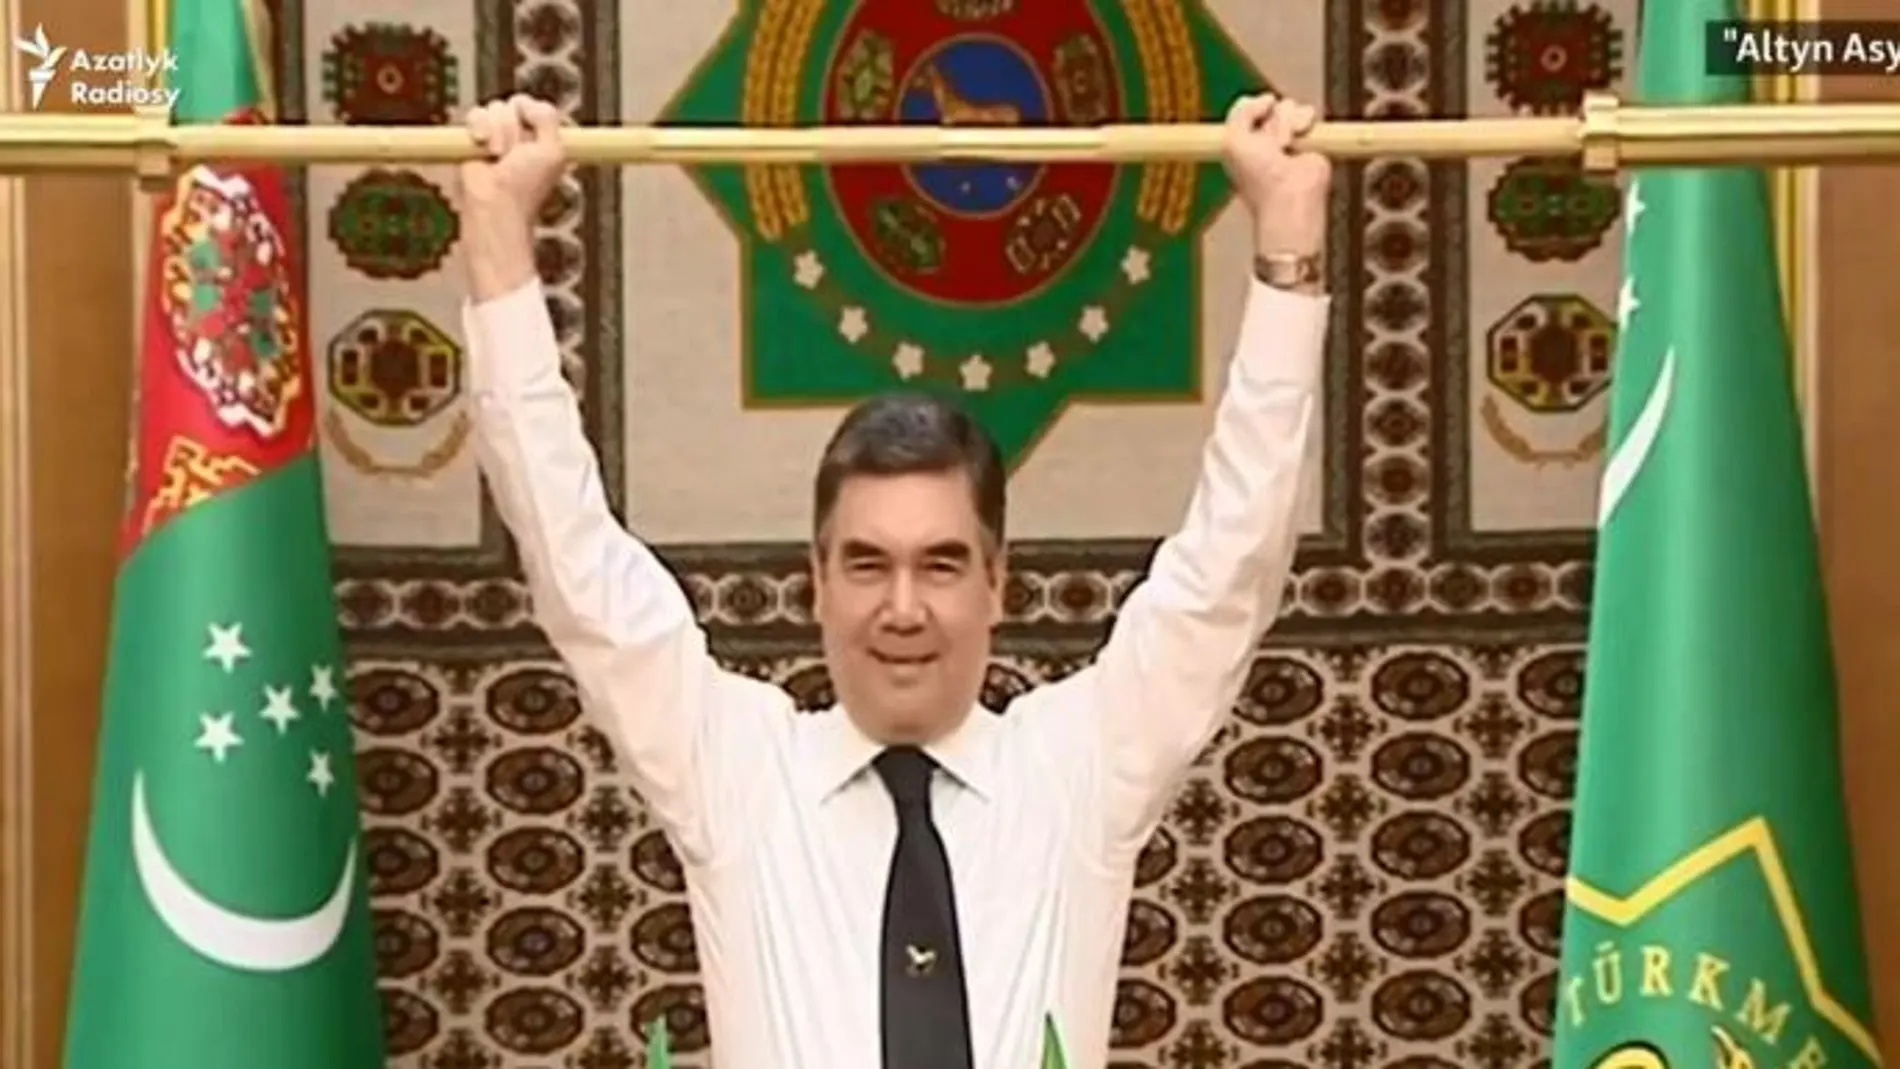 El presidente de Turkmenistán, Gurbanguly Berdymukhamedov, en una imagen de archivo